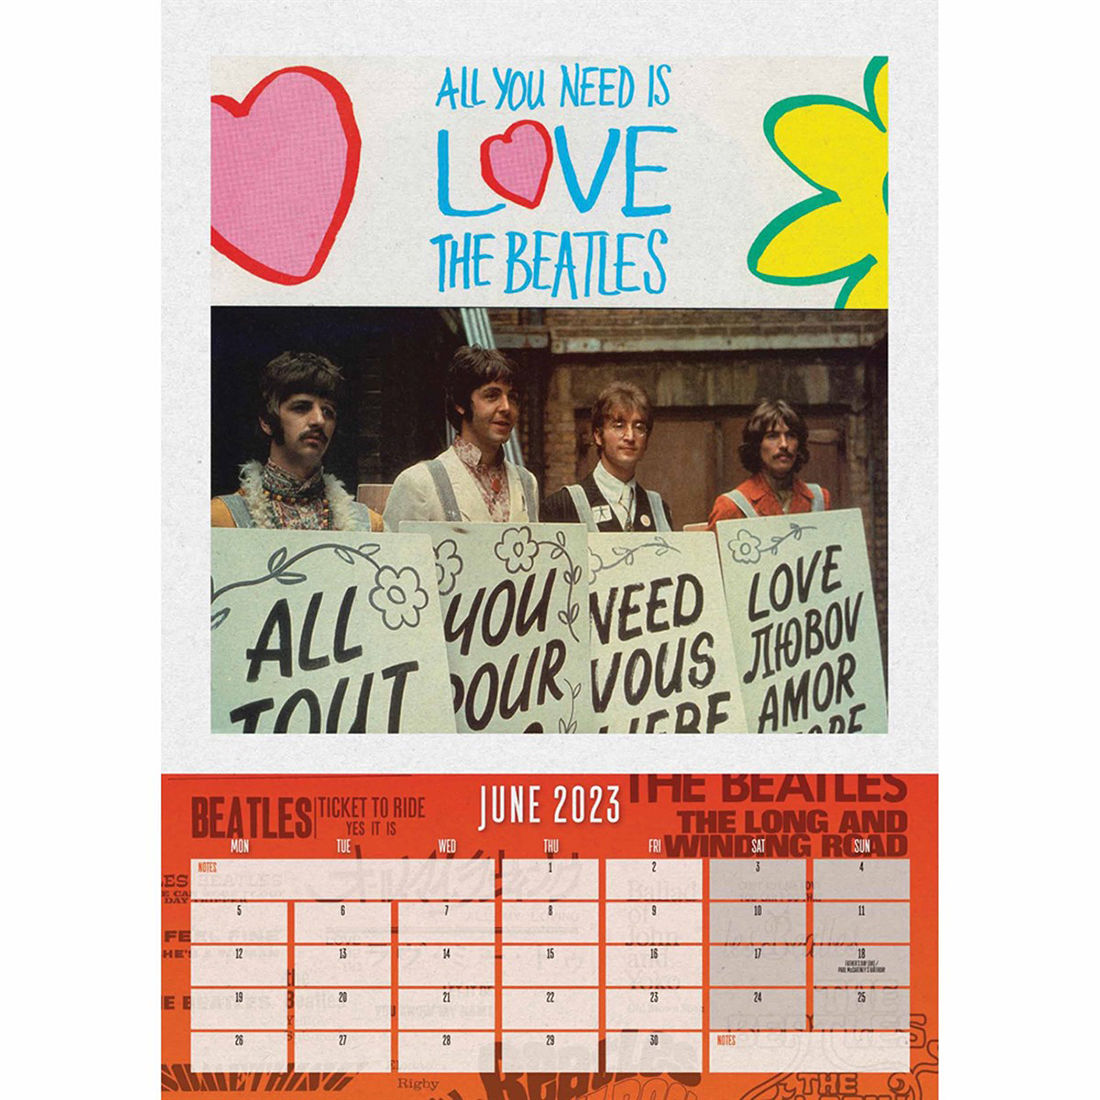 The Beatles - BEATLES 2023 SQUARE CALENDAR